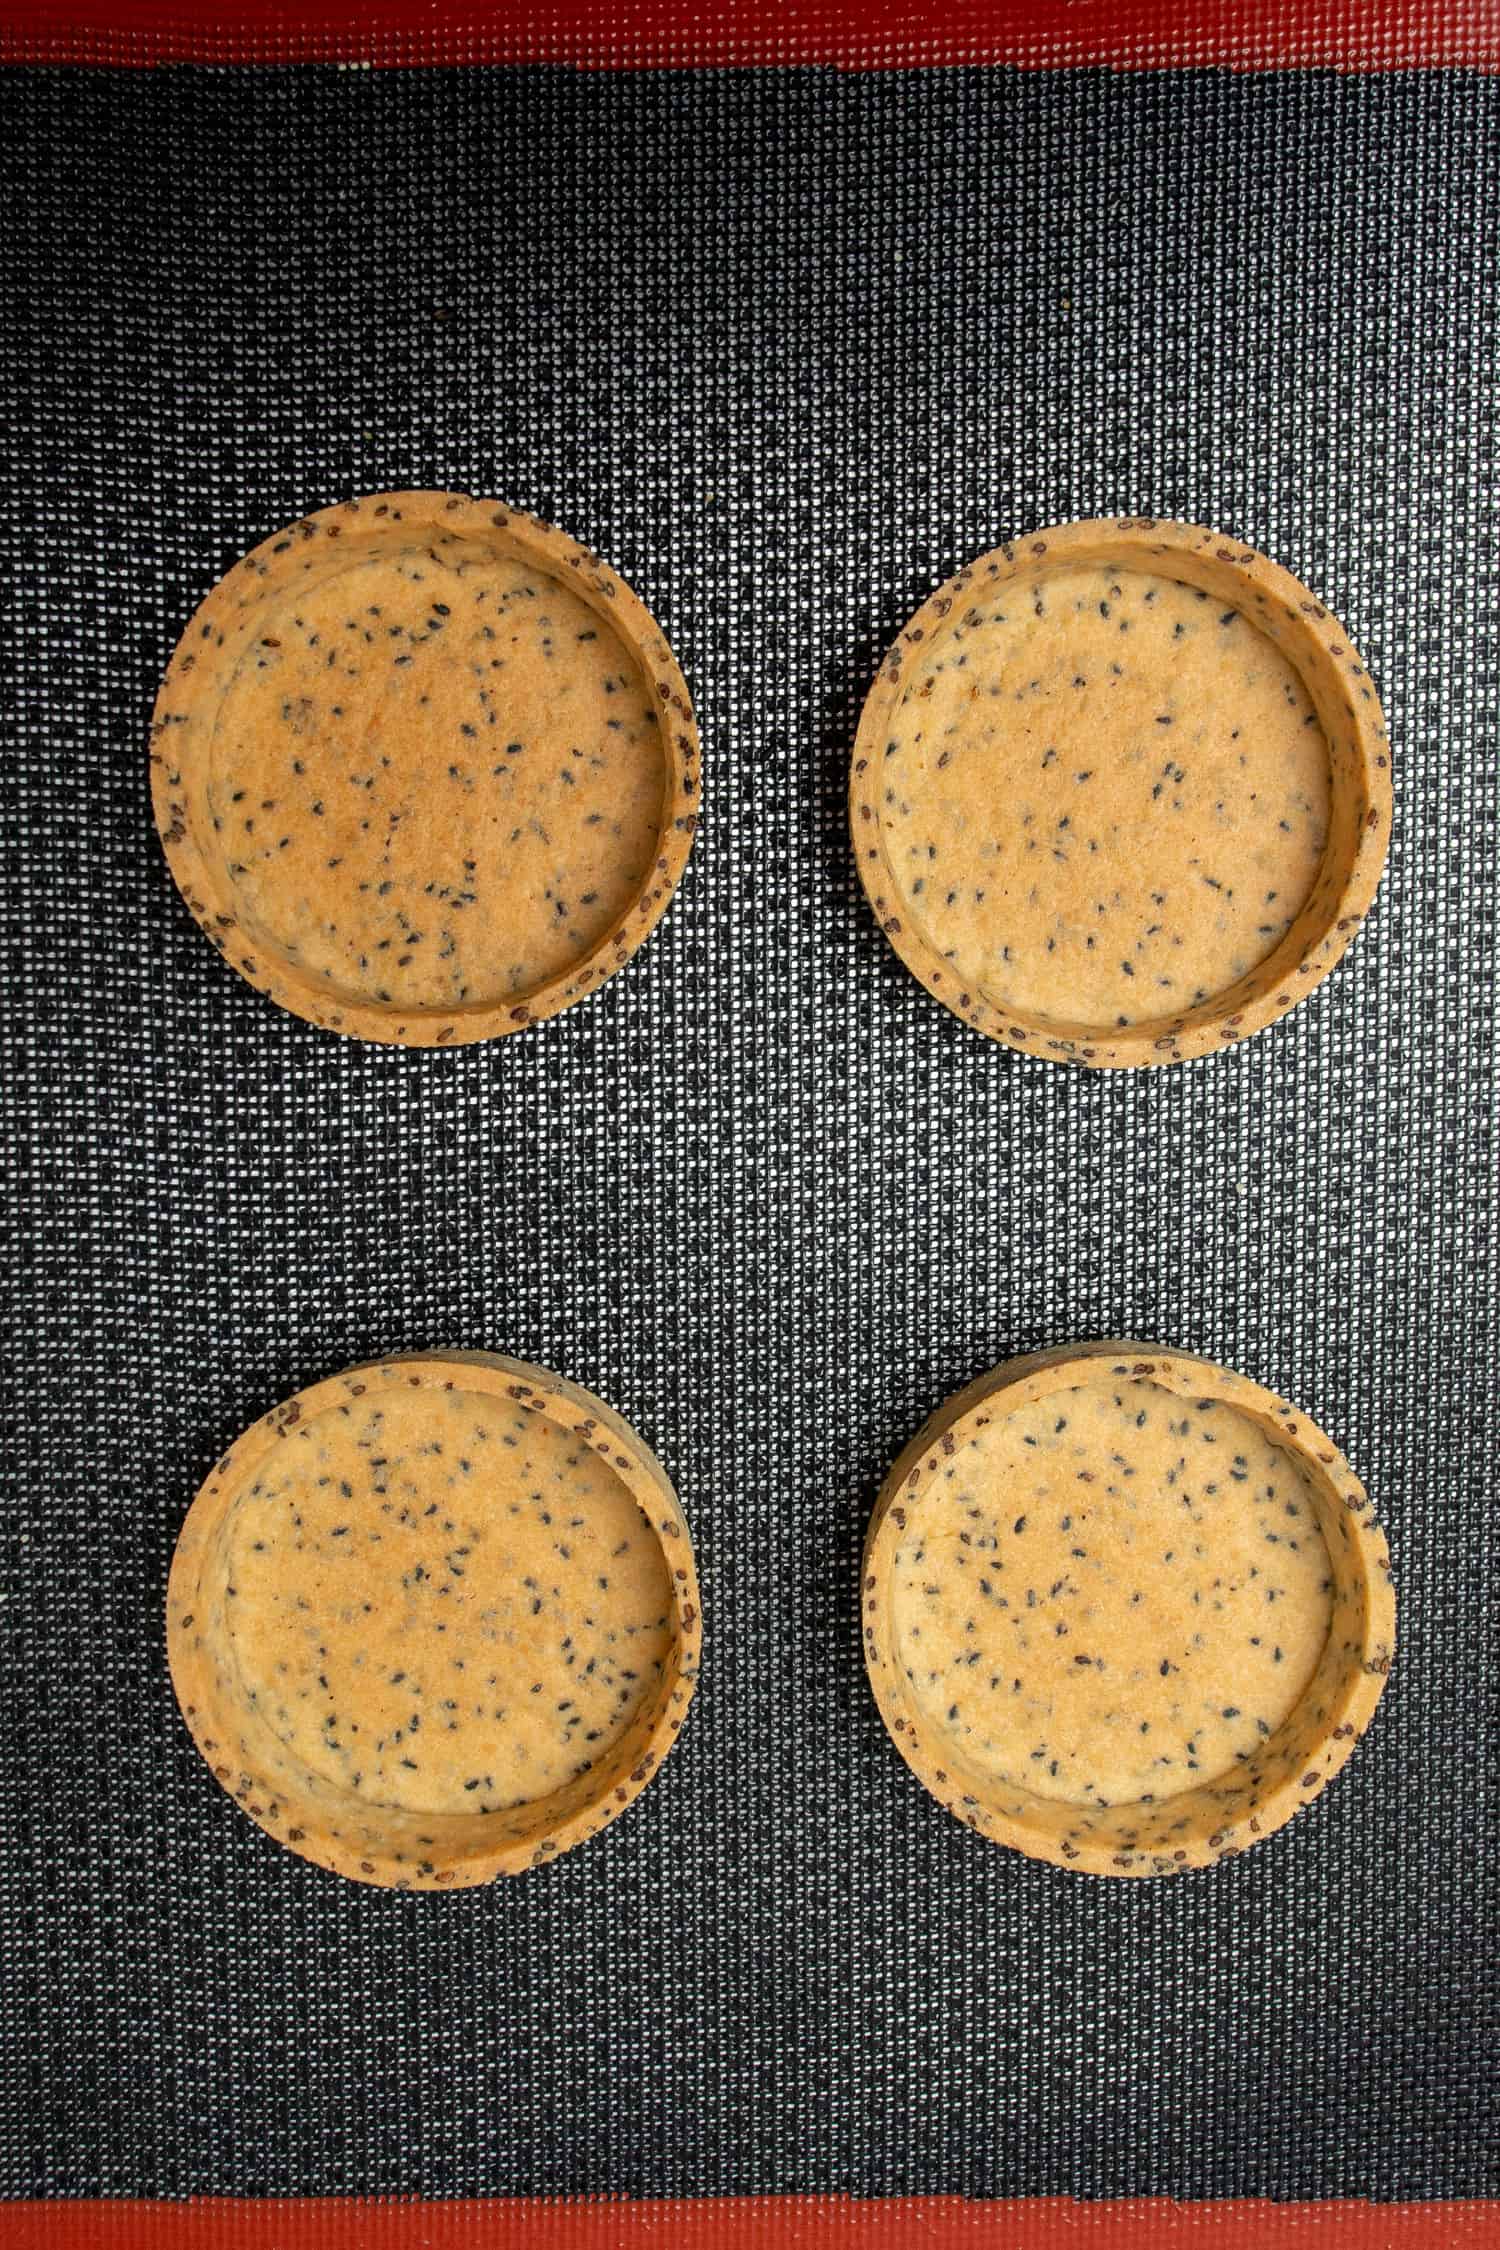 4 pcs of Black sesame Tart shells on a perforated baking mat.